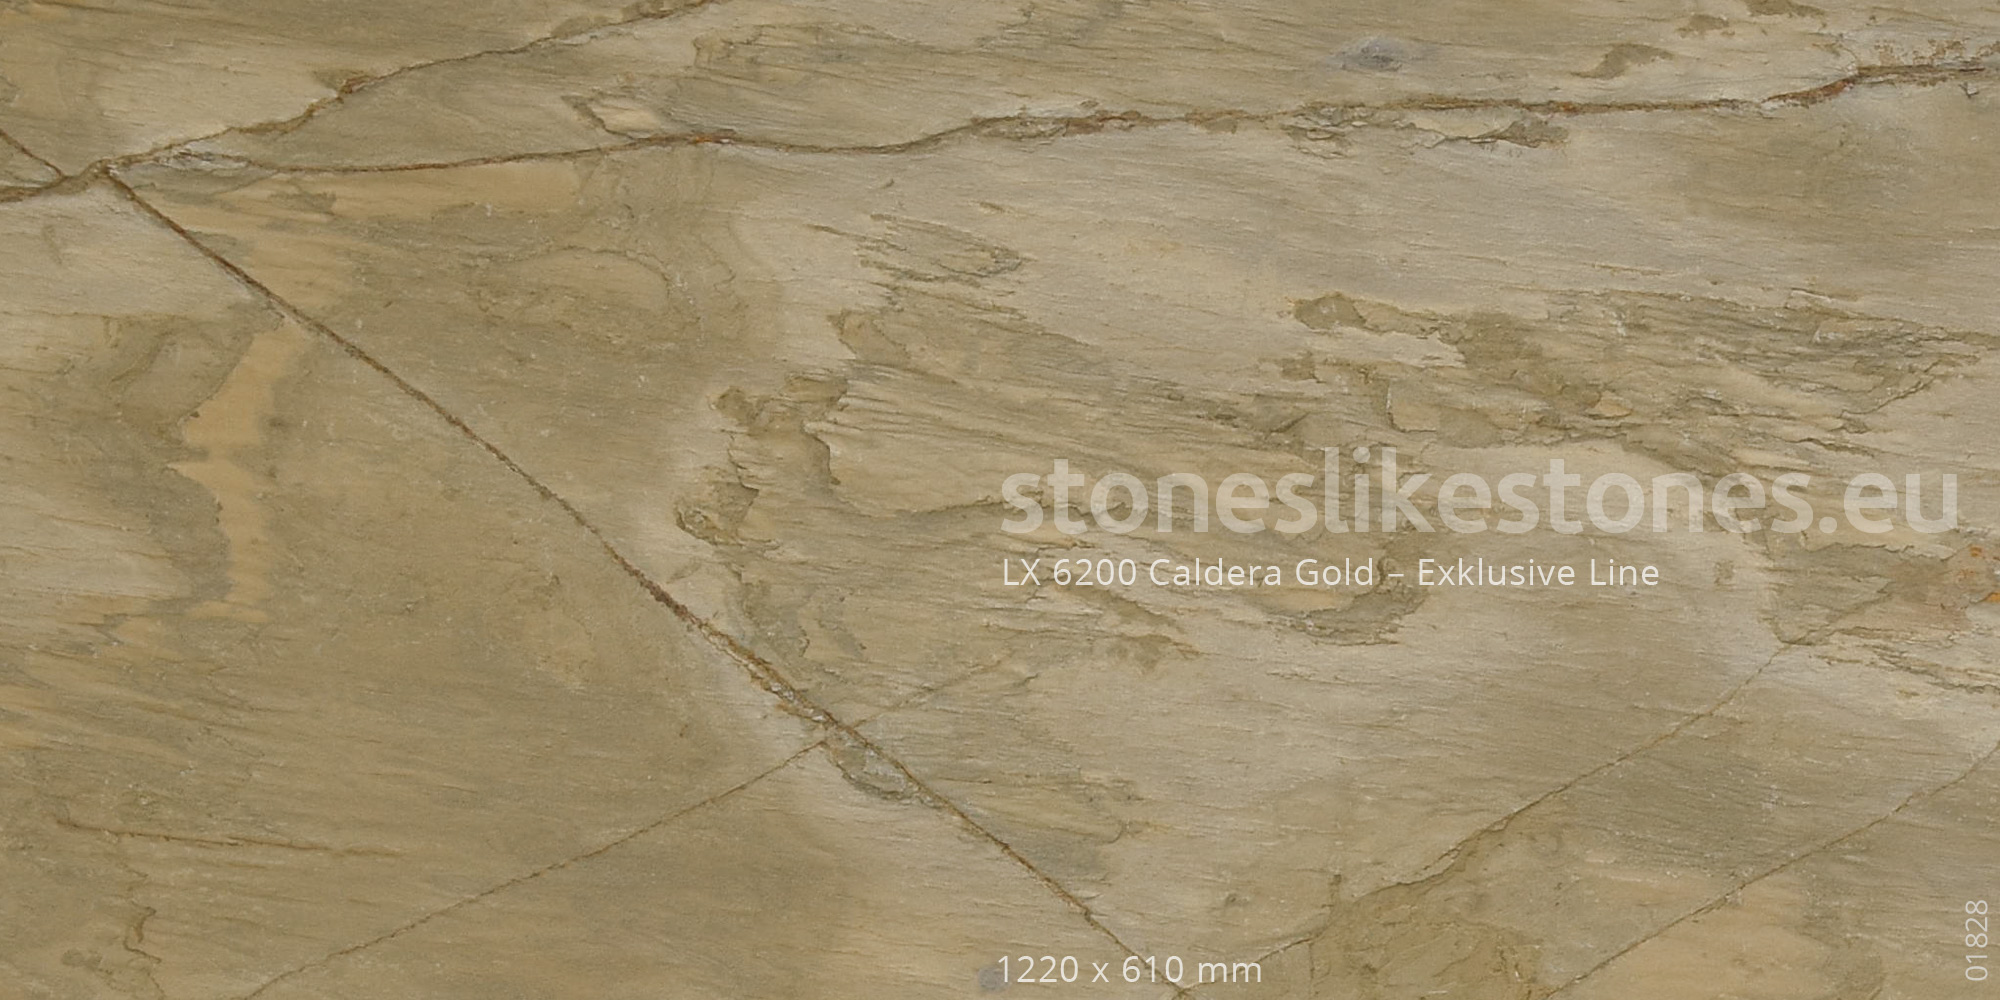 StoneslikeStones EXCLUSIVE LINE LX 6200 Caldera Gold 1828